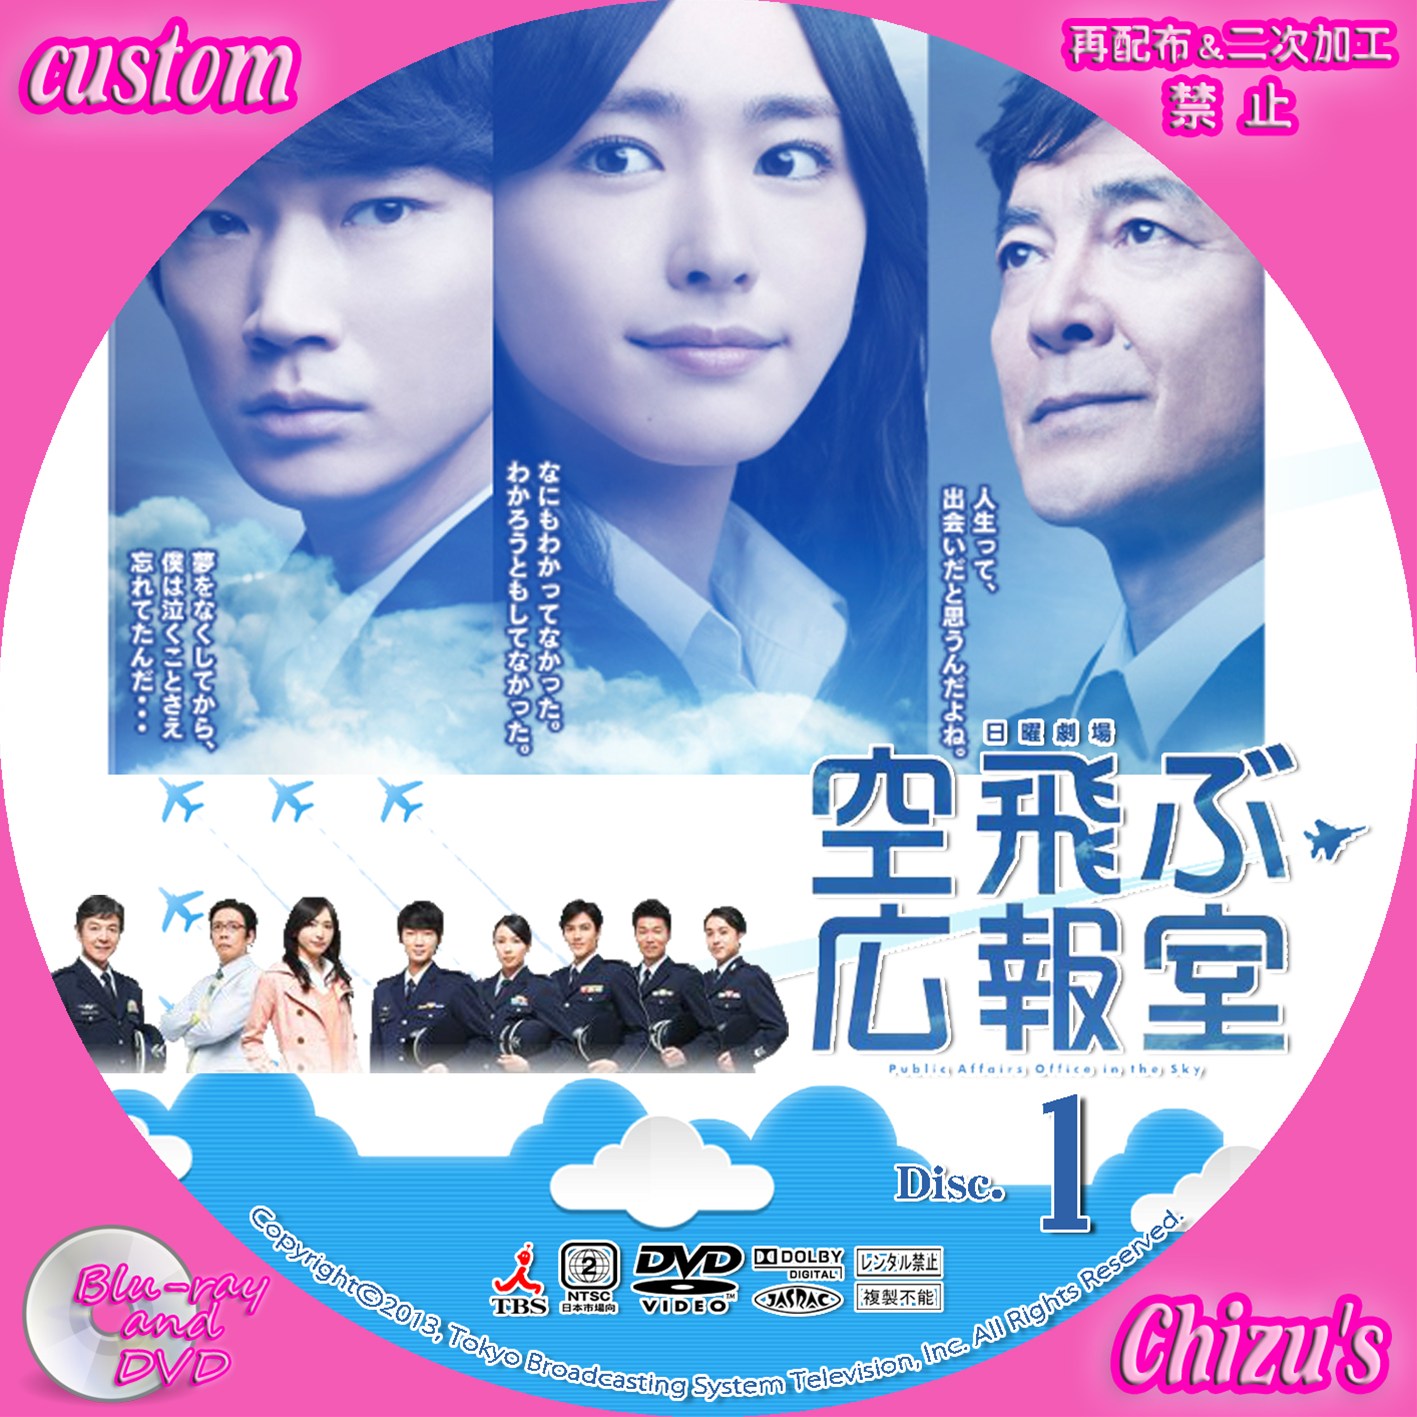 Custom label of Blu-ray and DVD - FC2 BLOG パスワード認証